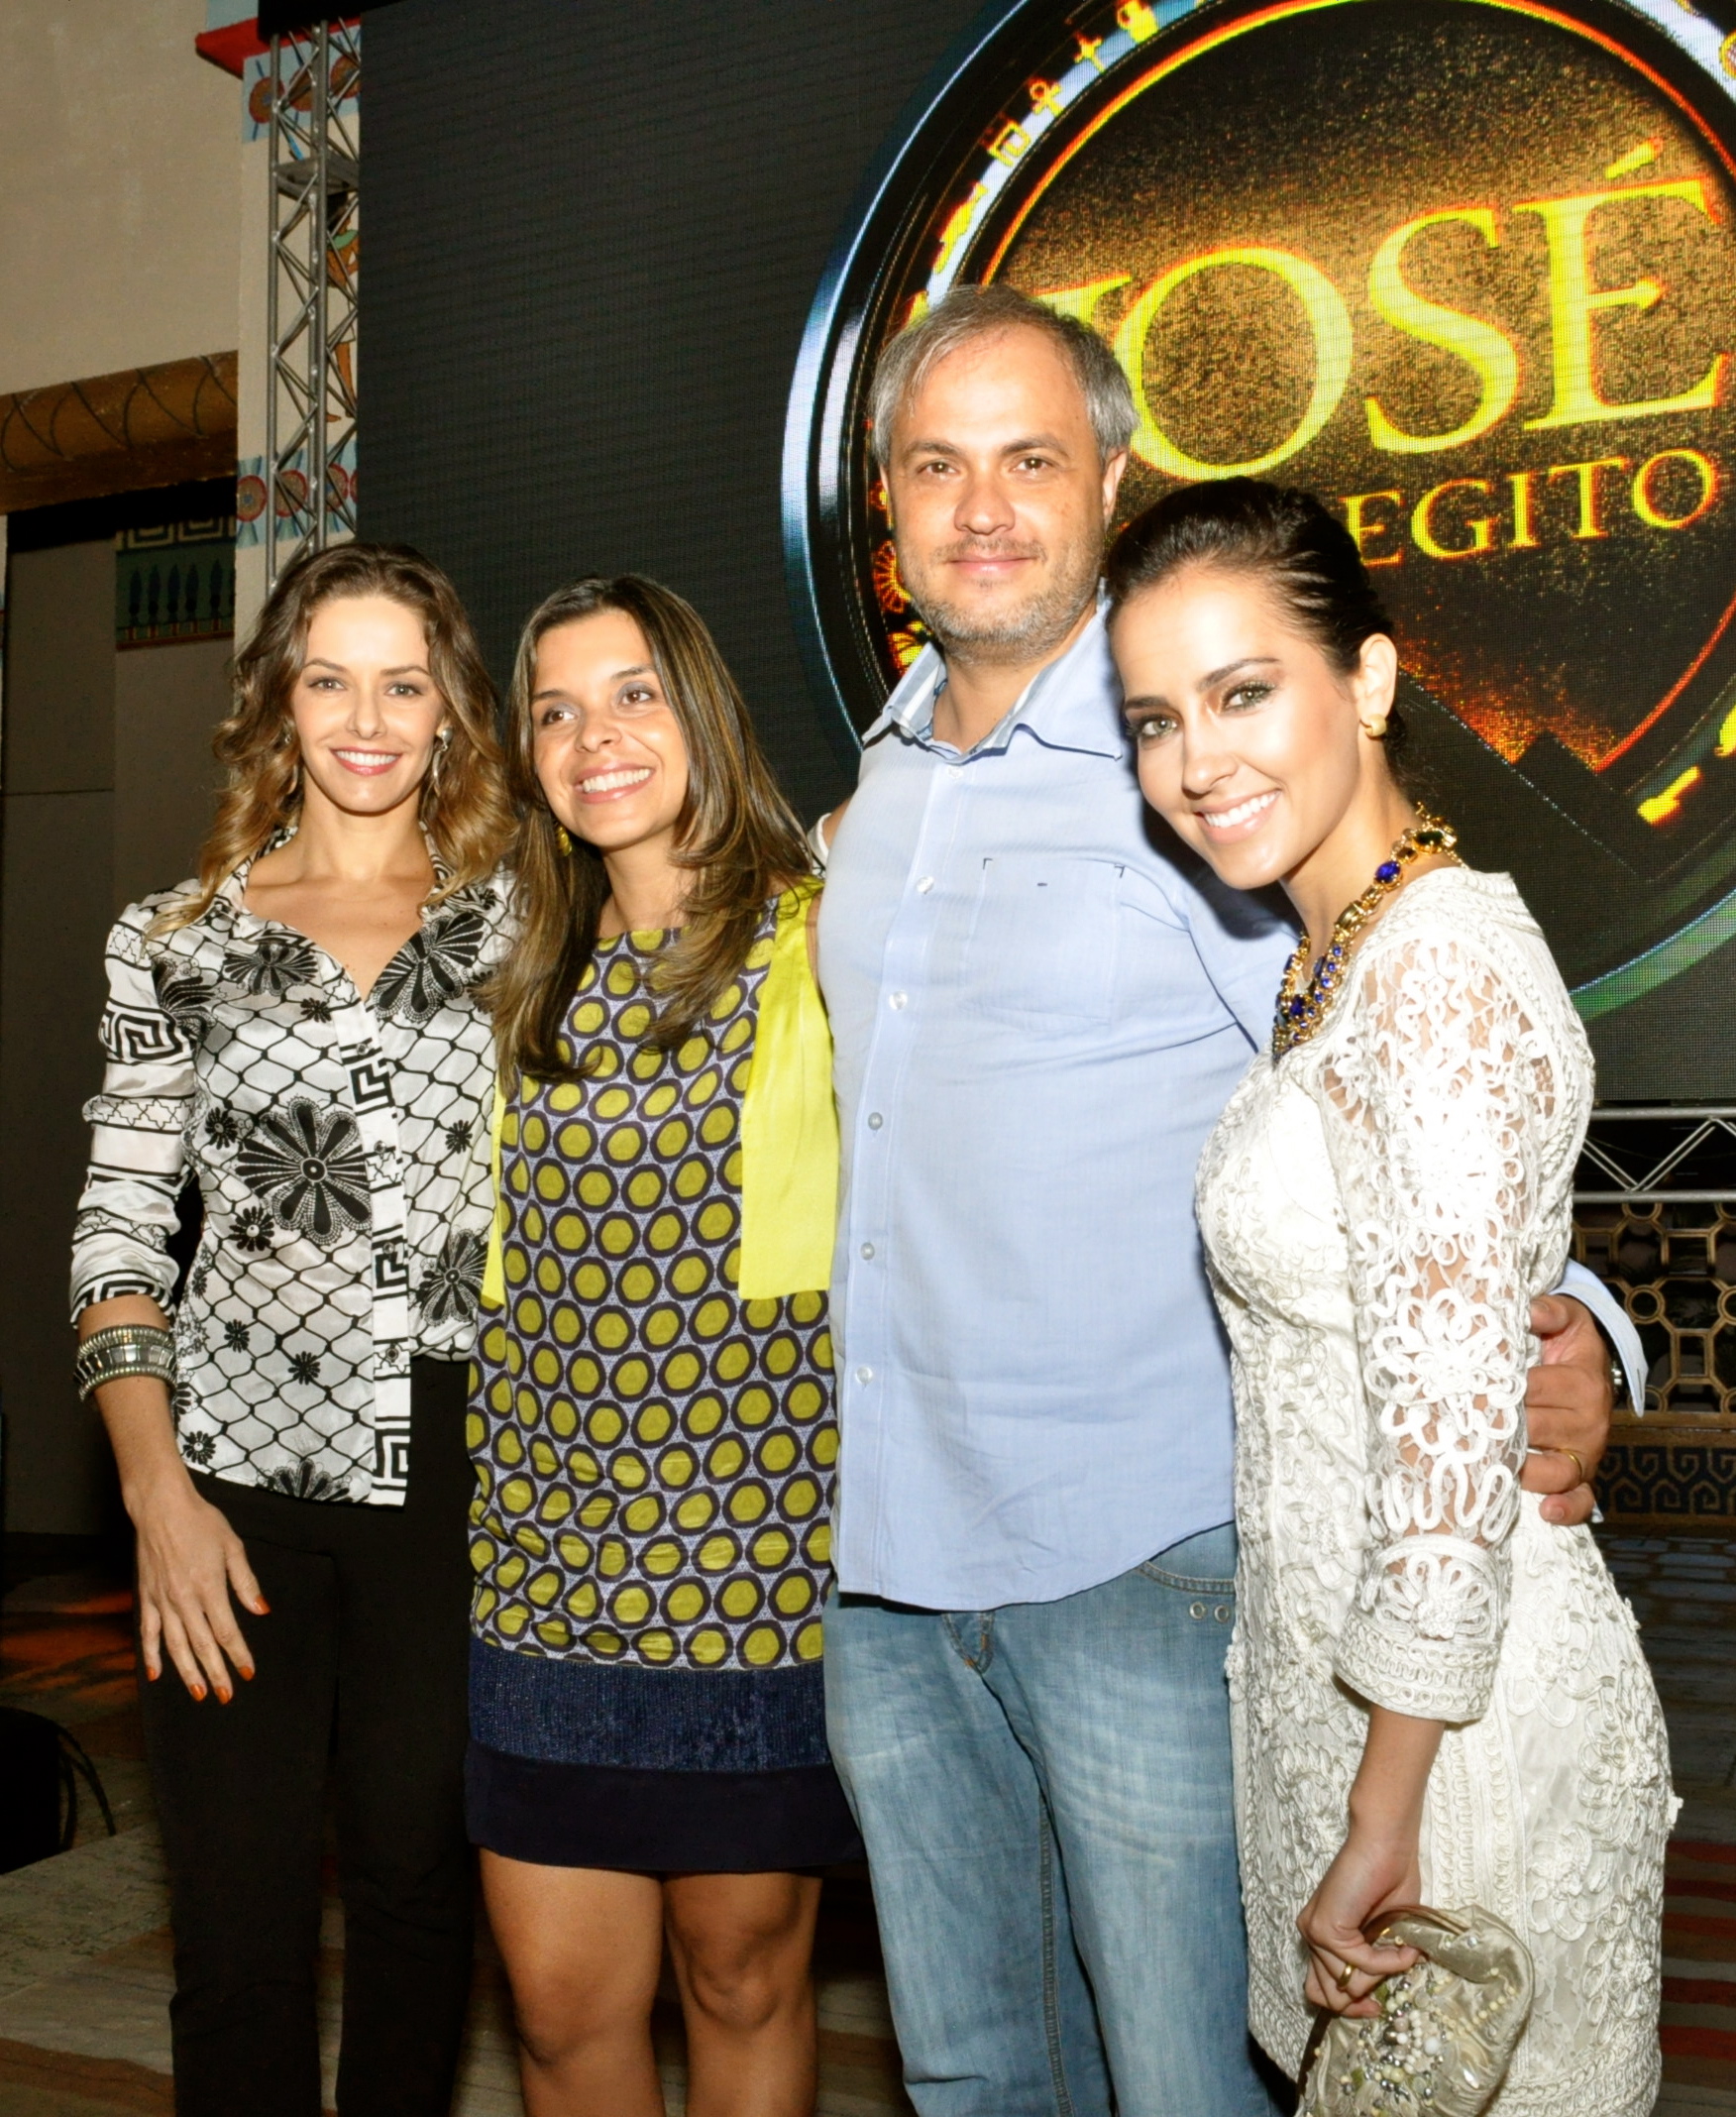 Alexandre Avancini, Vivian de Oliveira, Bianca Rinaldi and Maytê Piragibe at event of Jose do Egito (TV series 2013).